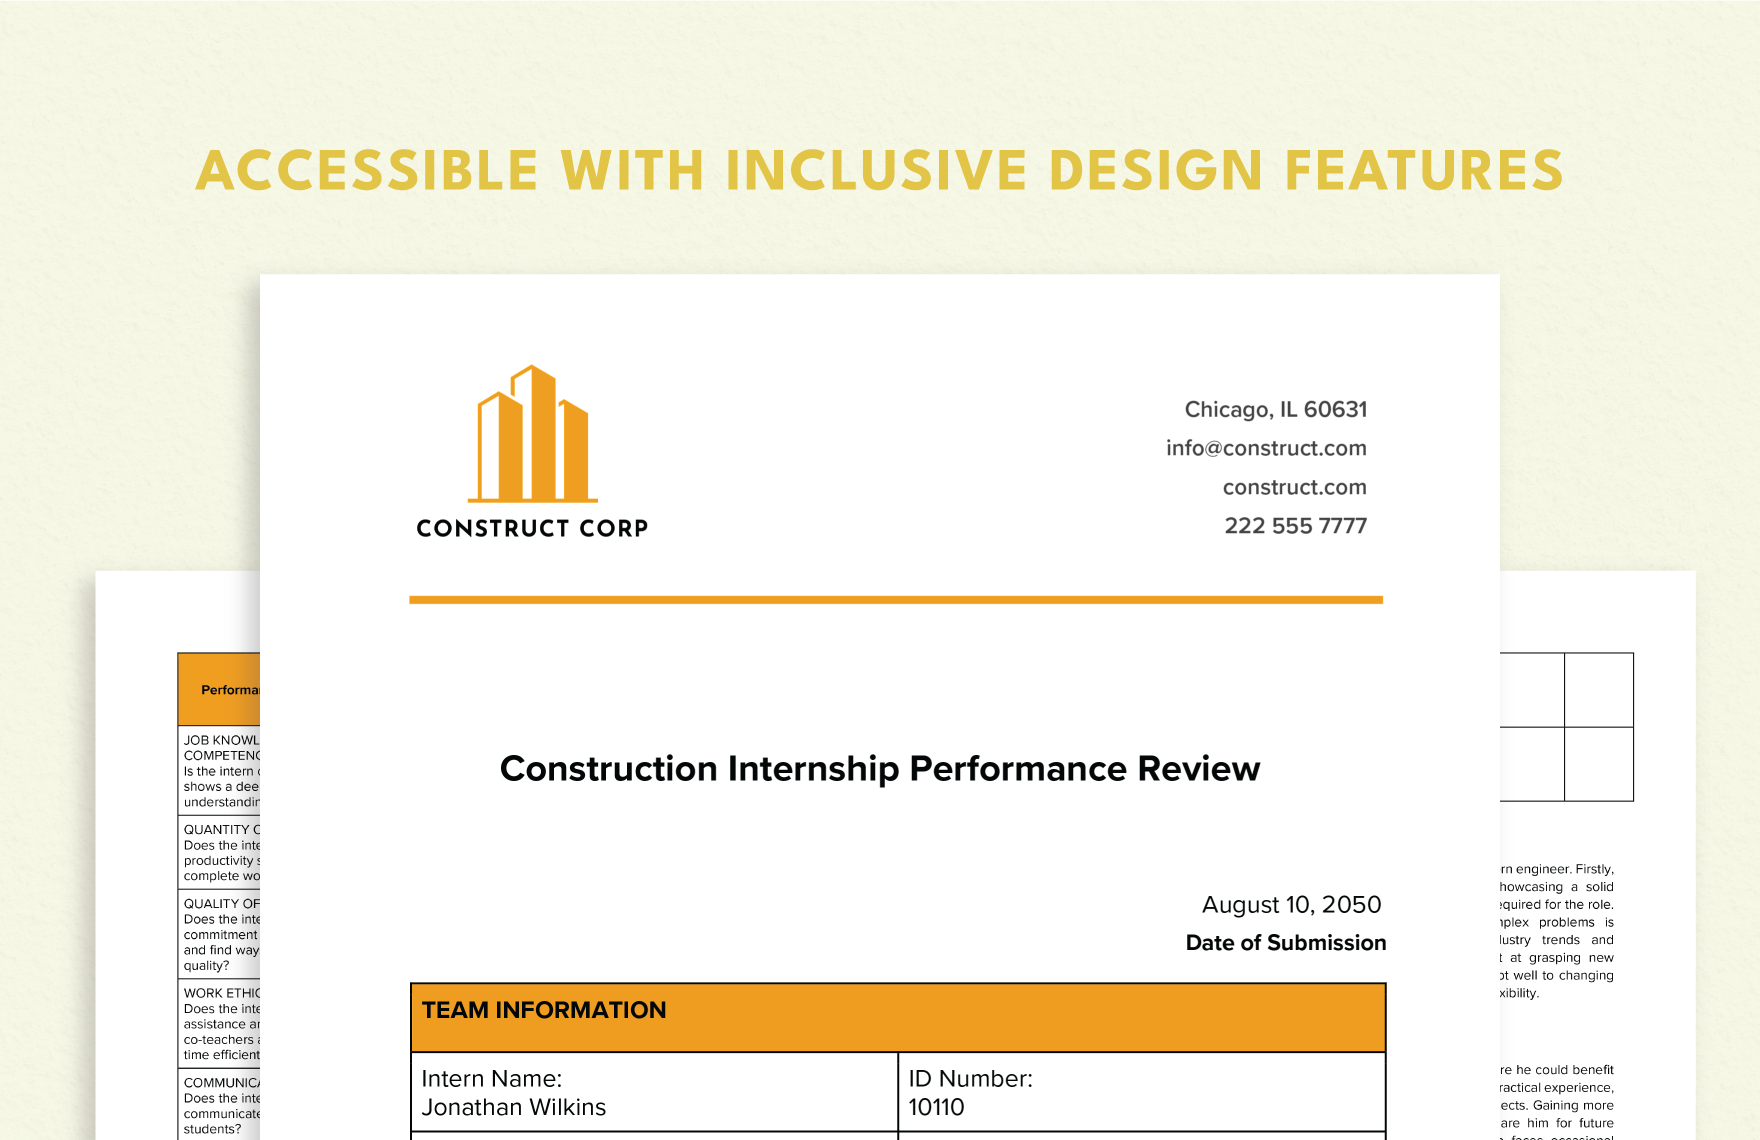 Construction Internship Performance Review Template